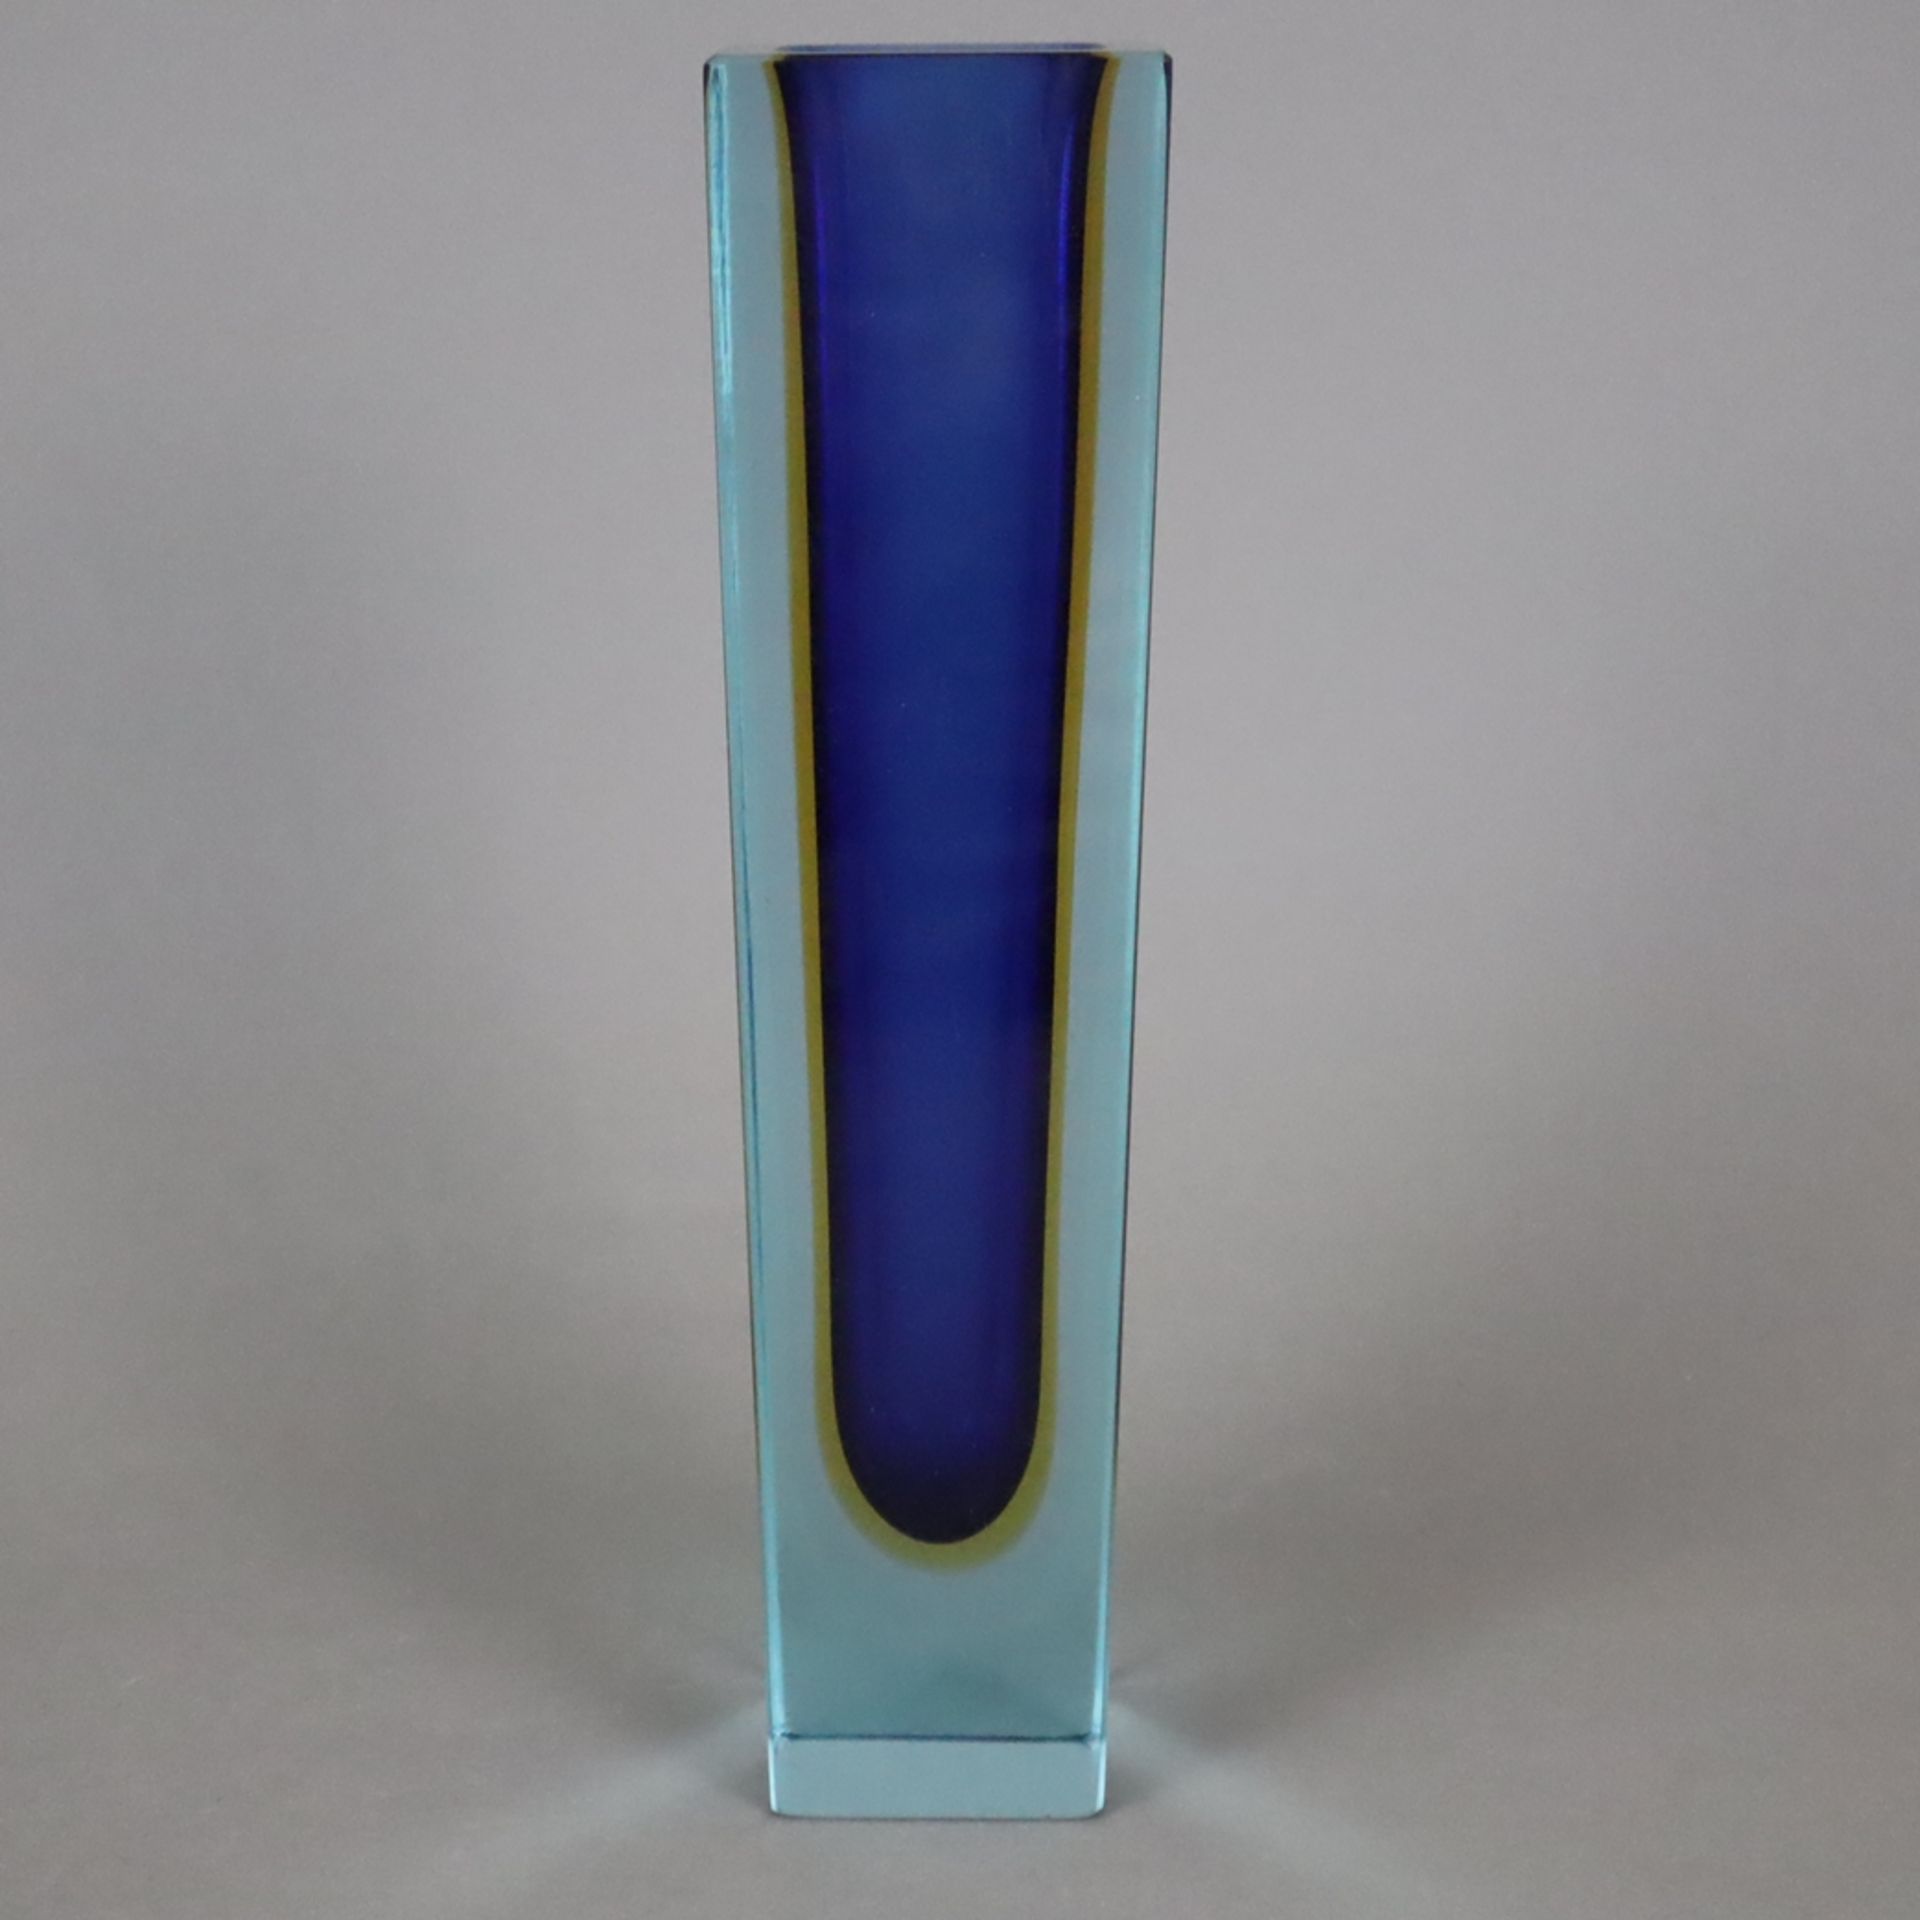 Schwere Sommerso-Vase - Murano / Italien, 2. Hälfte 20. Jh., dickwandiges farbloses Glas, blau unte